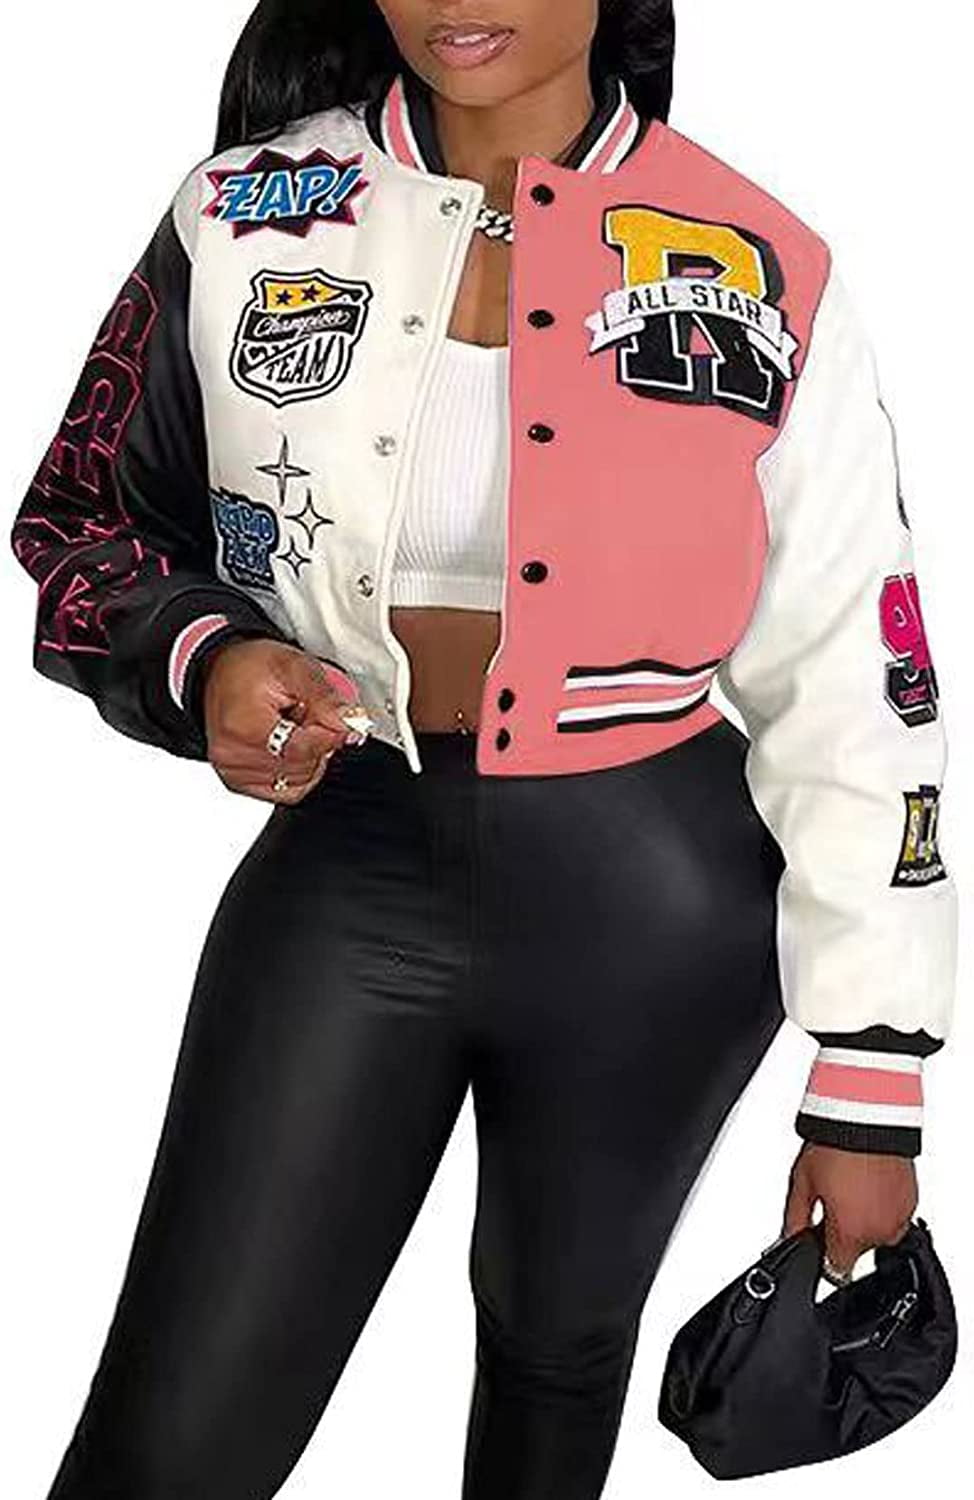 Women's New York Varsity Cropped Jacket